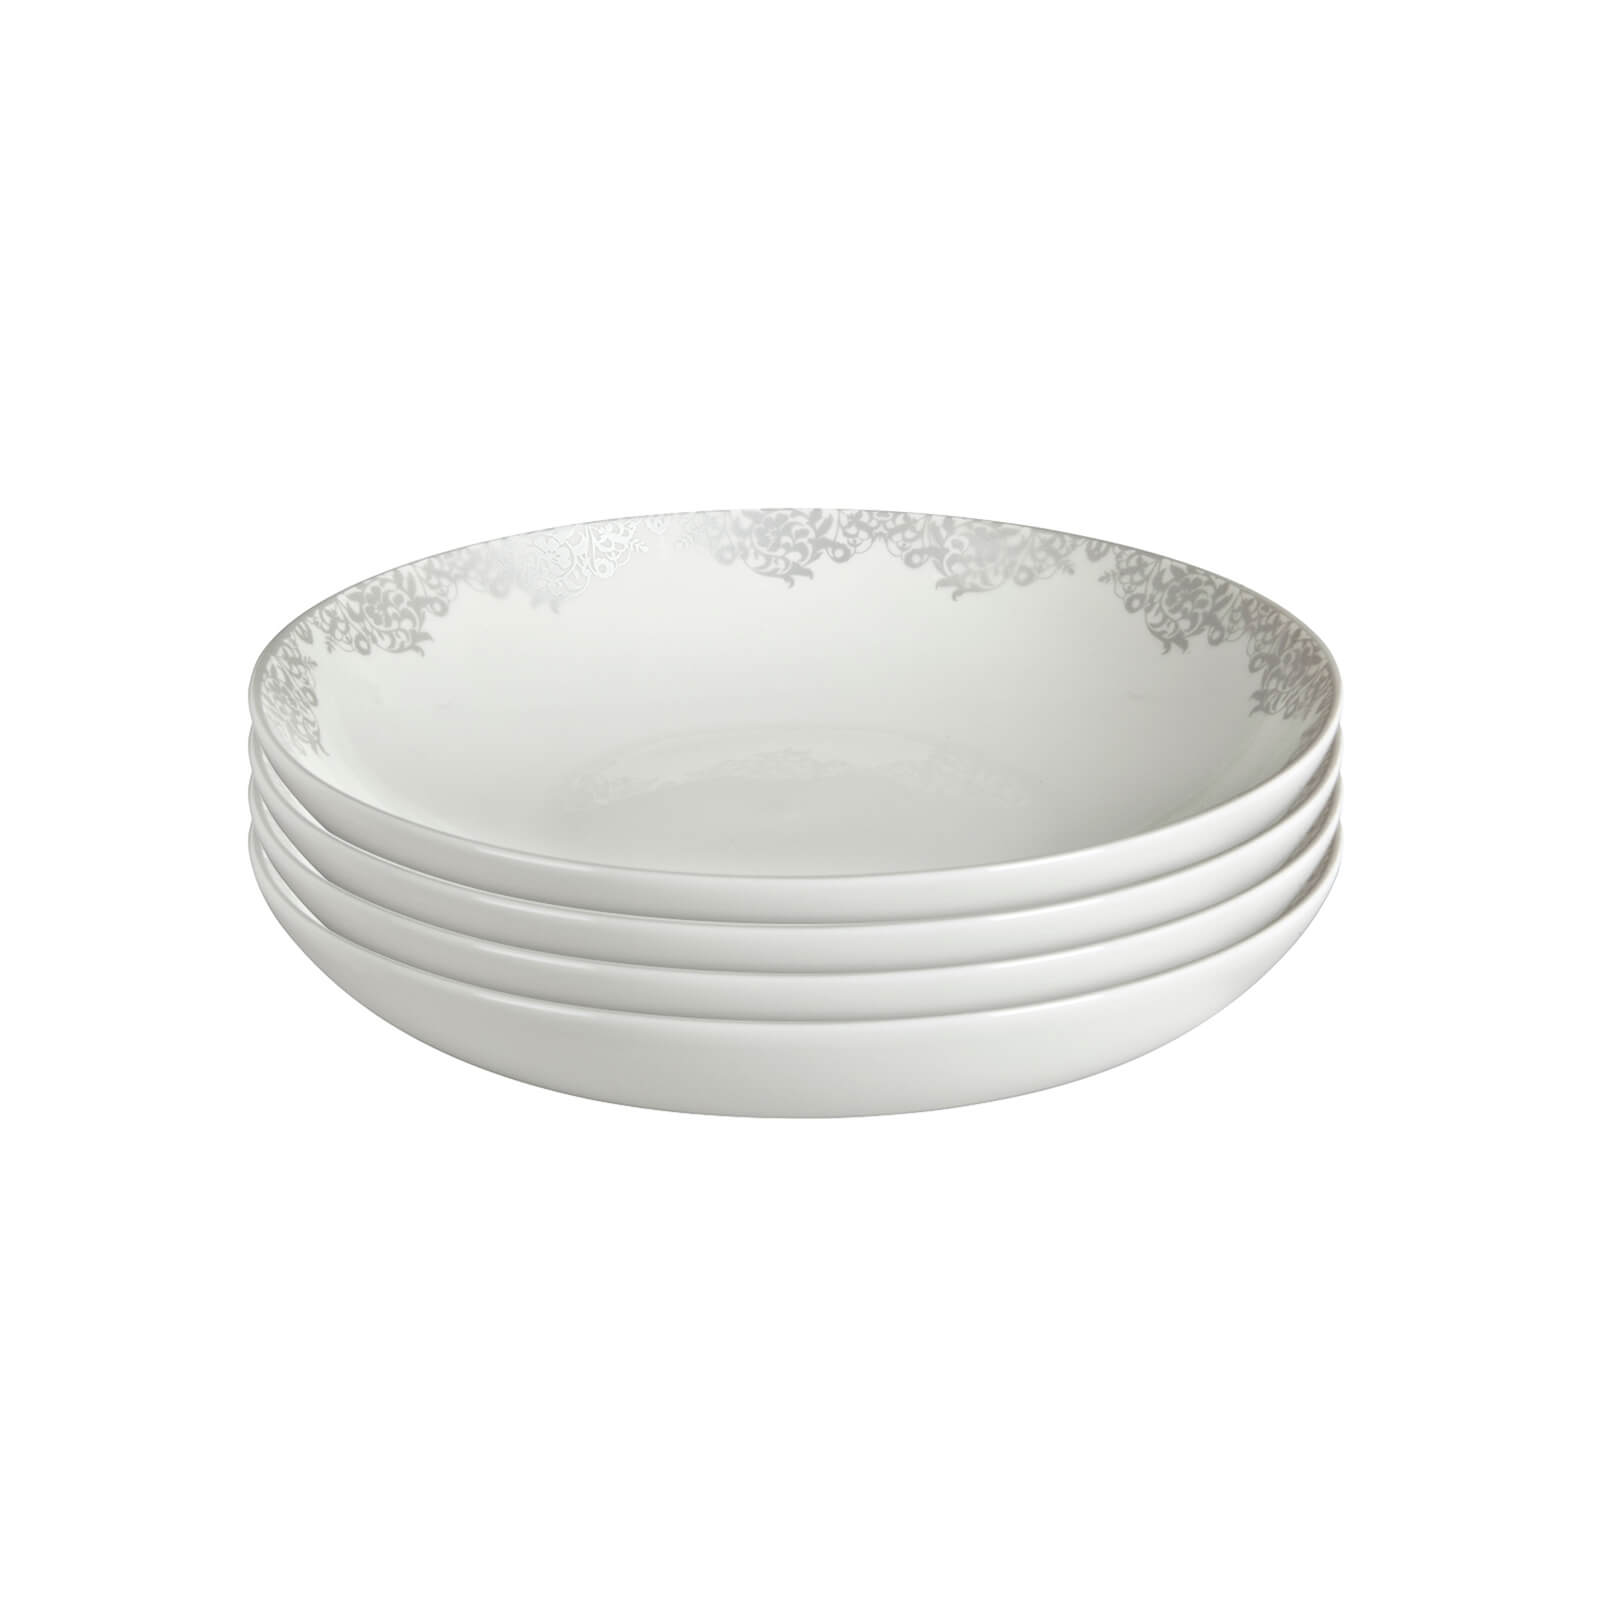 Denby Monsoon Filigree Silver Pasta Bowls - 4 Piece Set